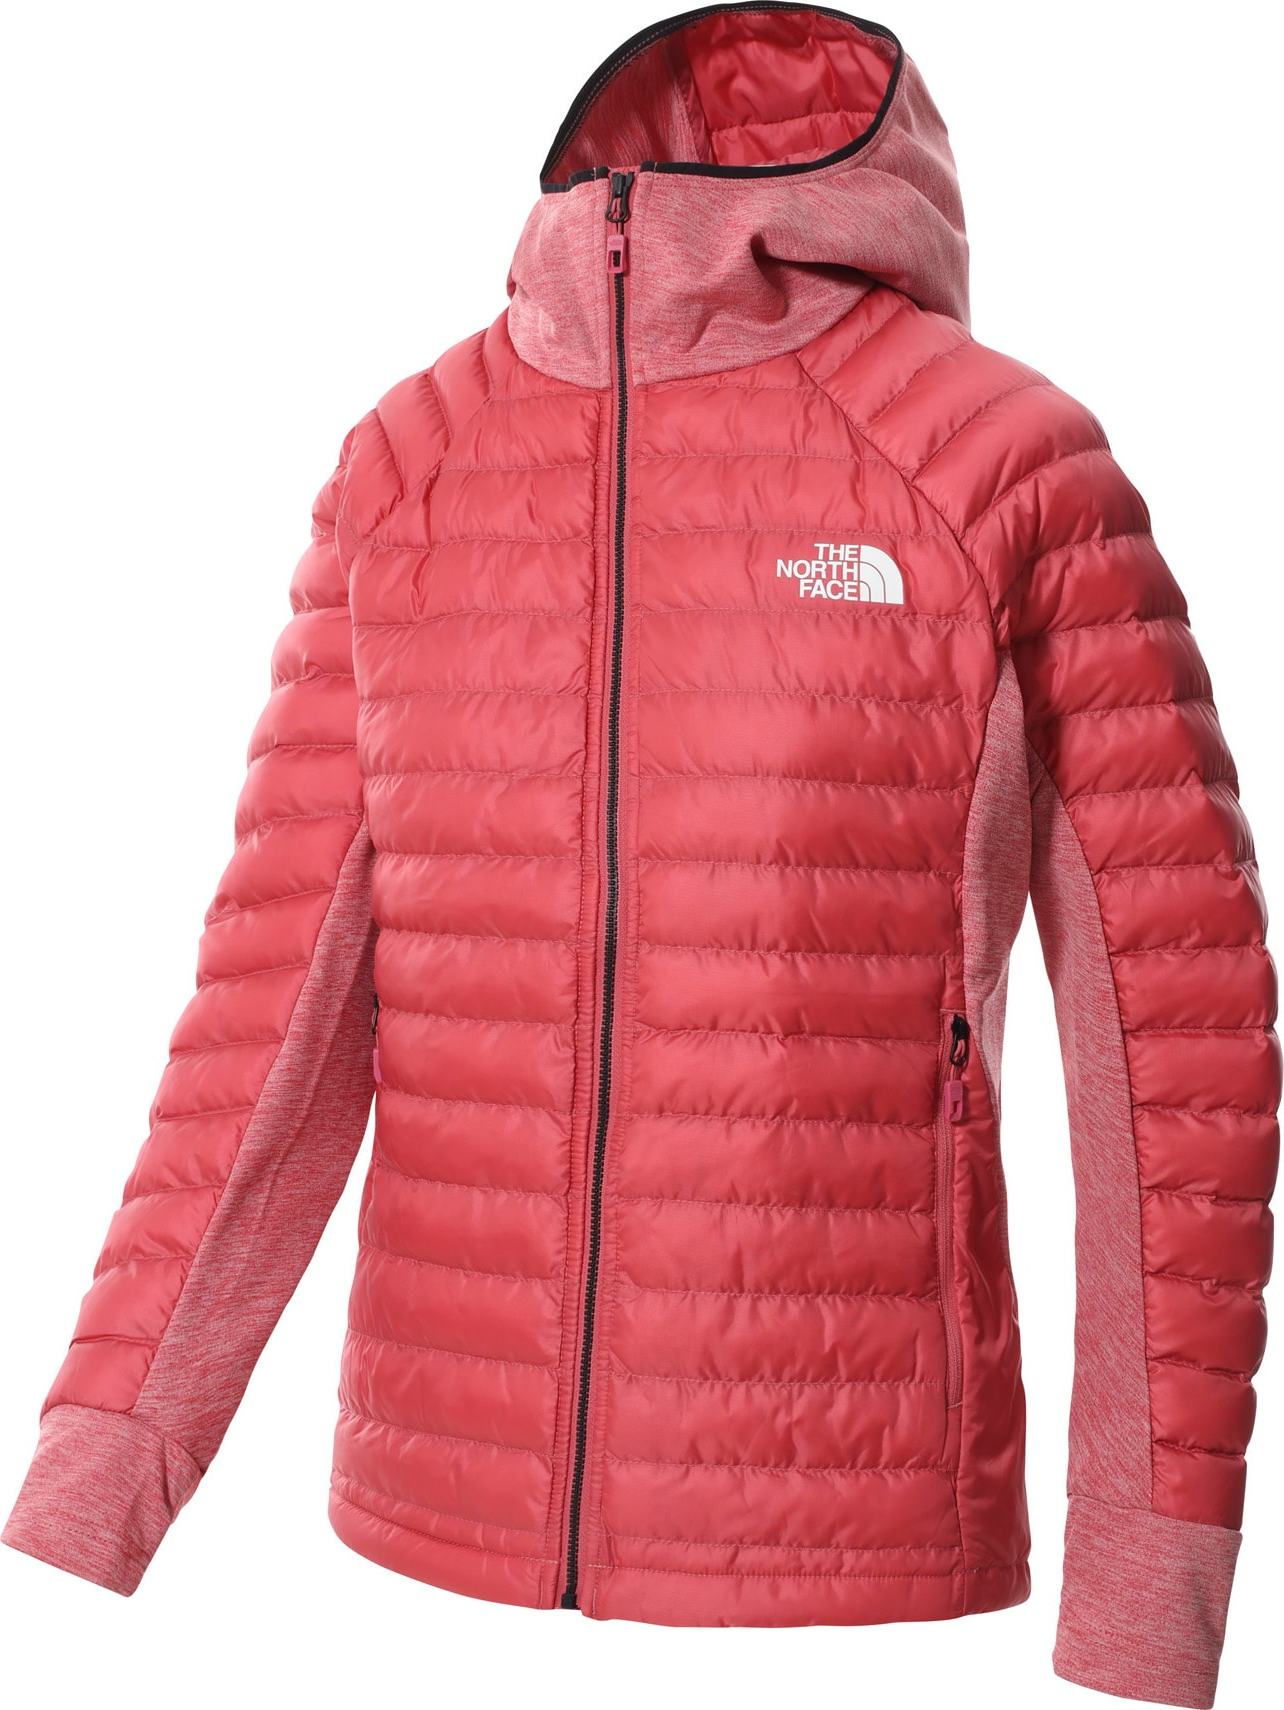 THE NORTH FACE Outdoorová bunda tmavě růžová / růžový melír / bílá